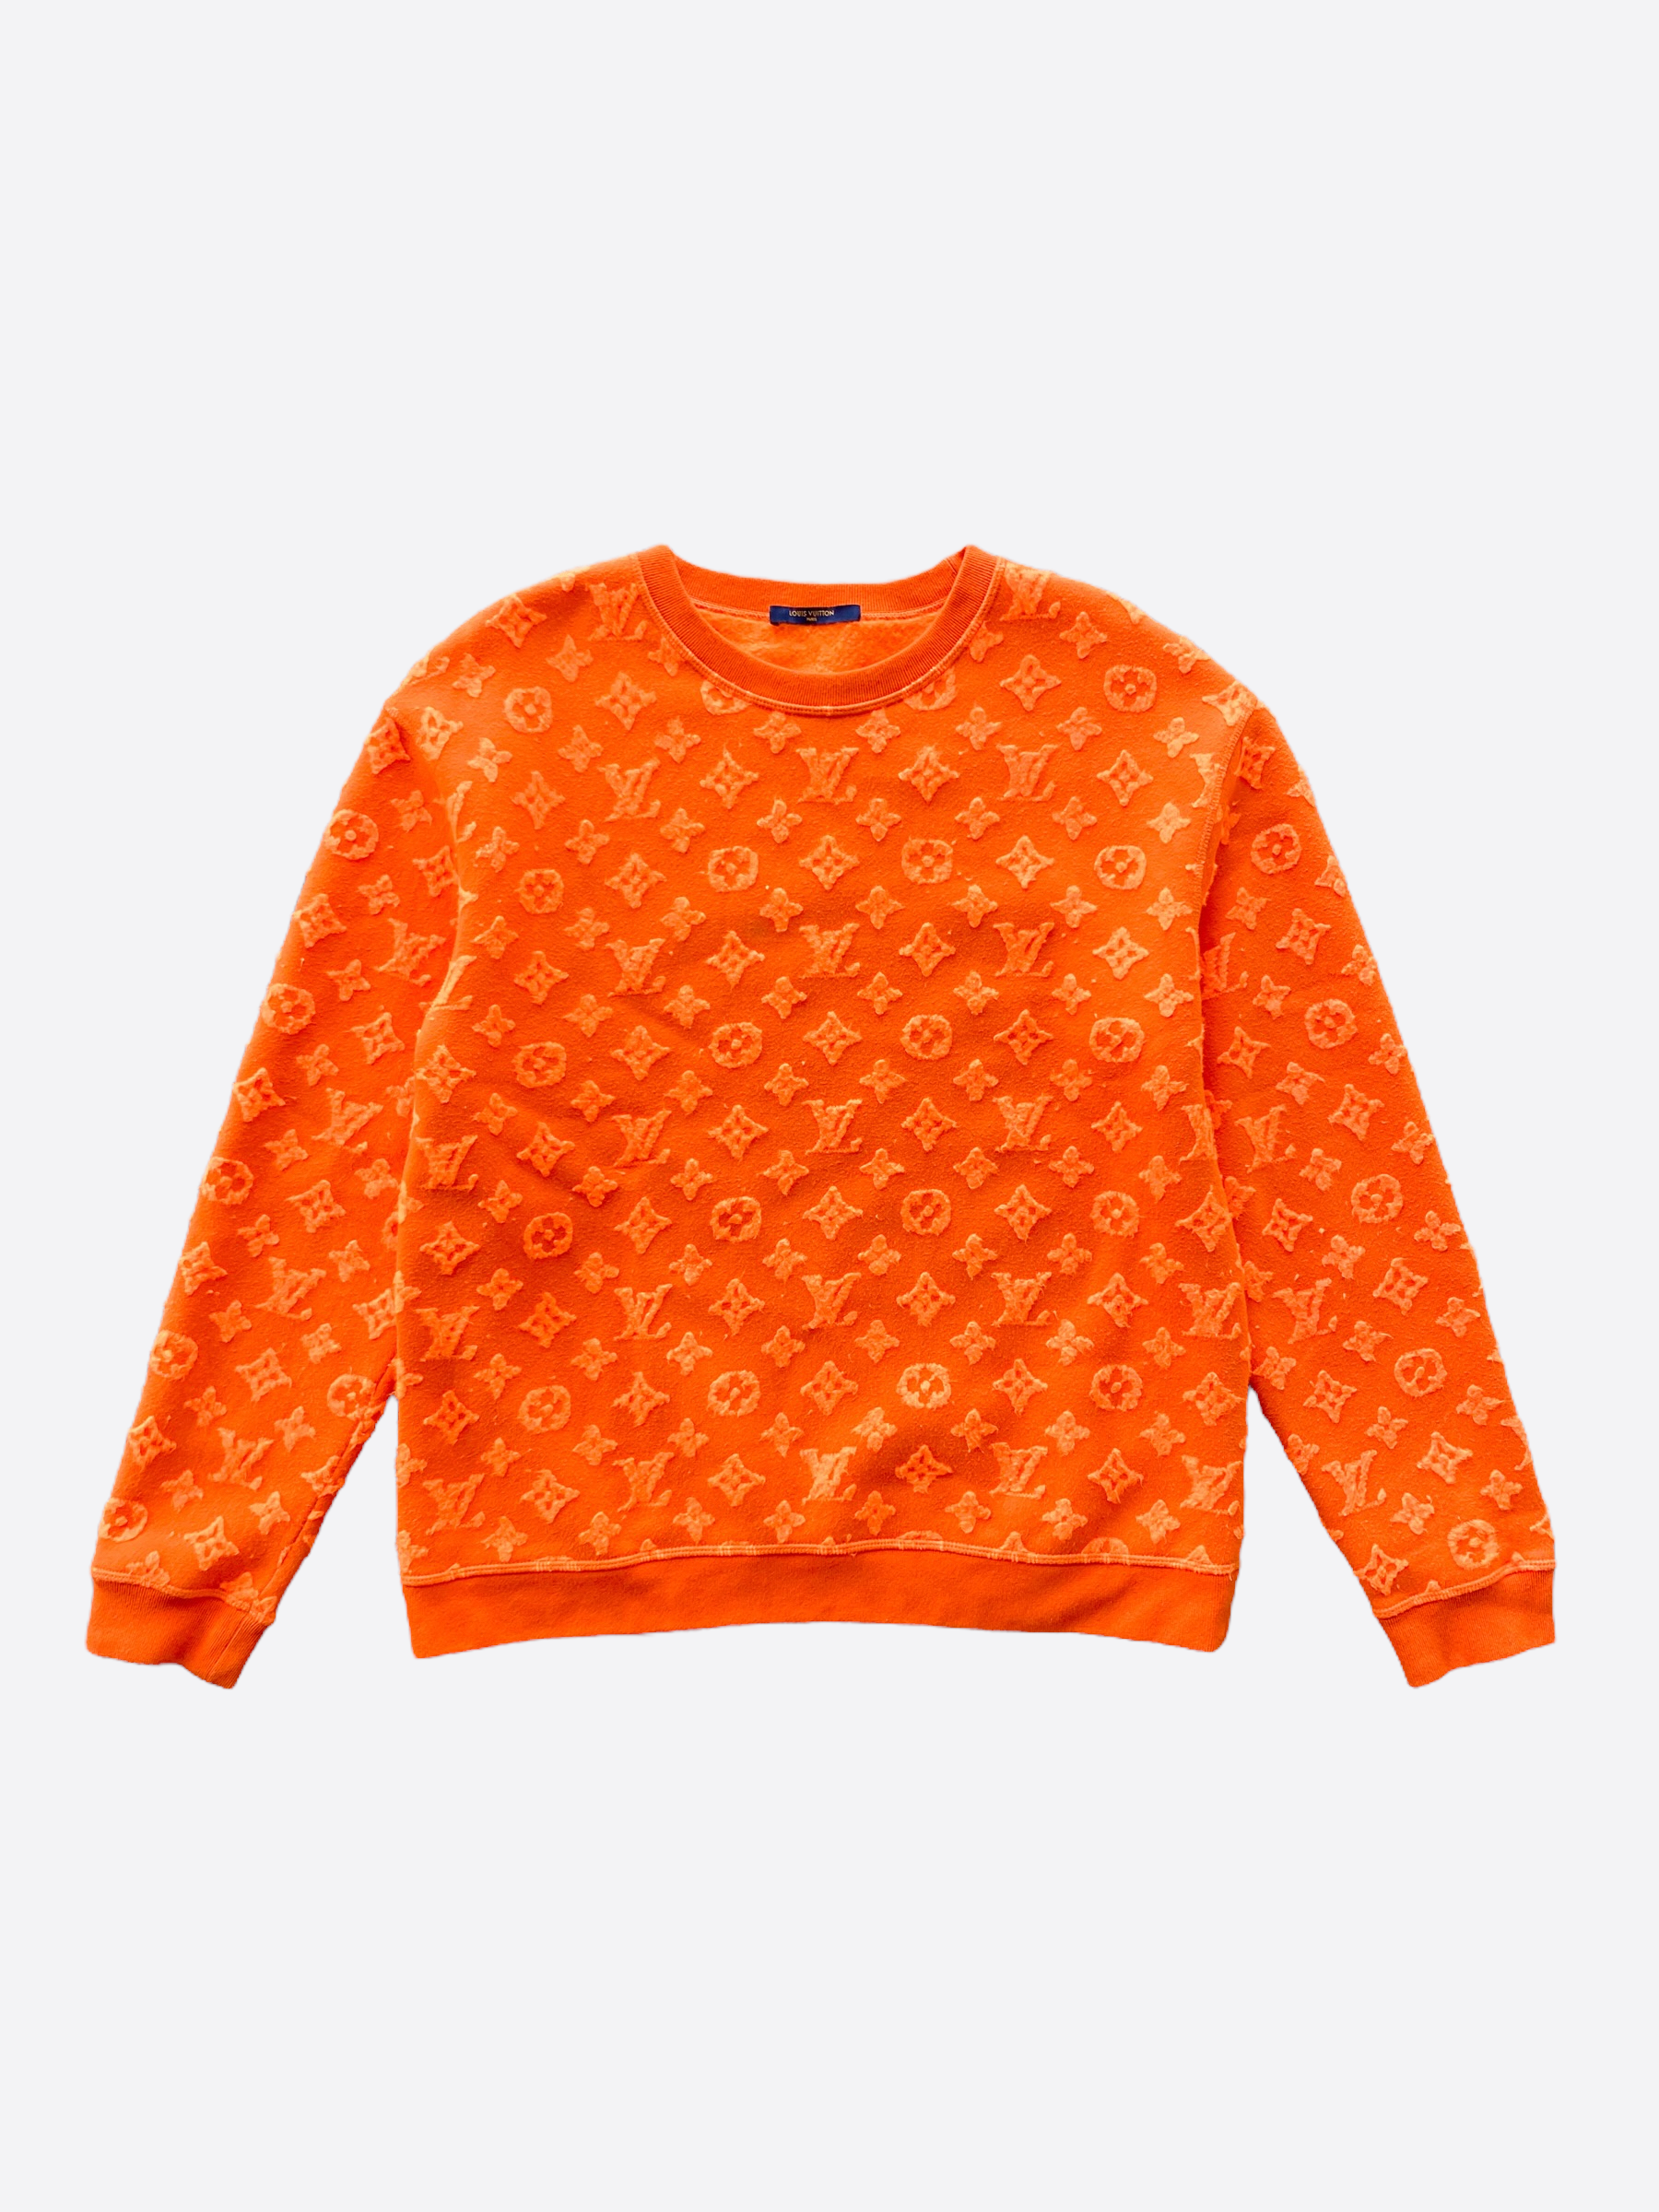 louis vuitton sweatshirt orange